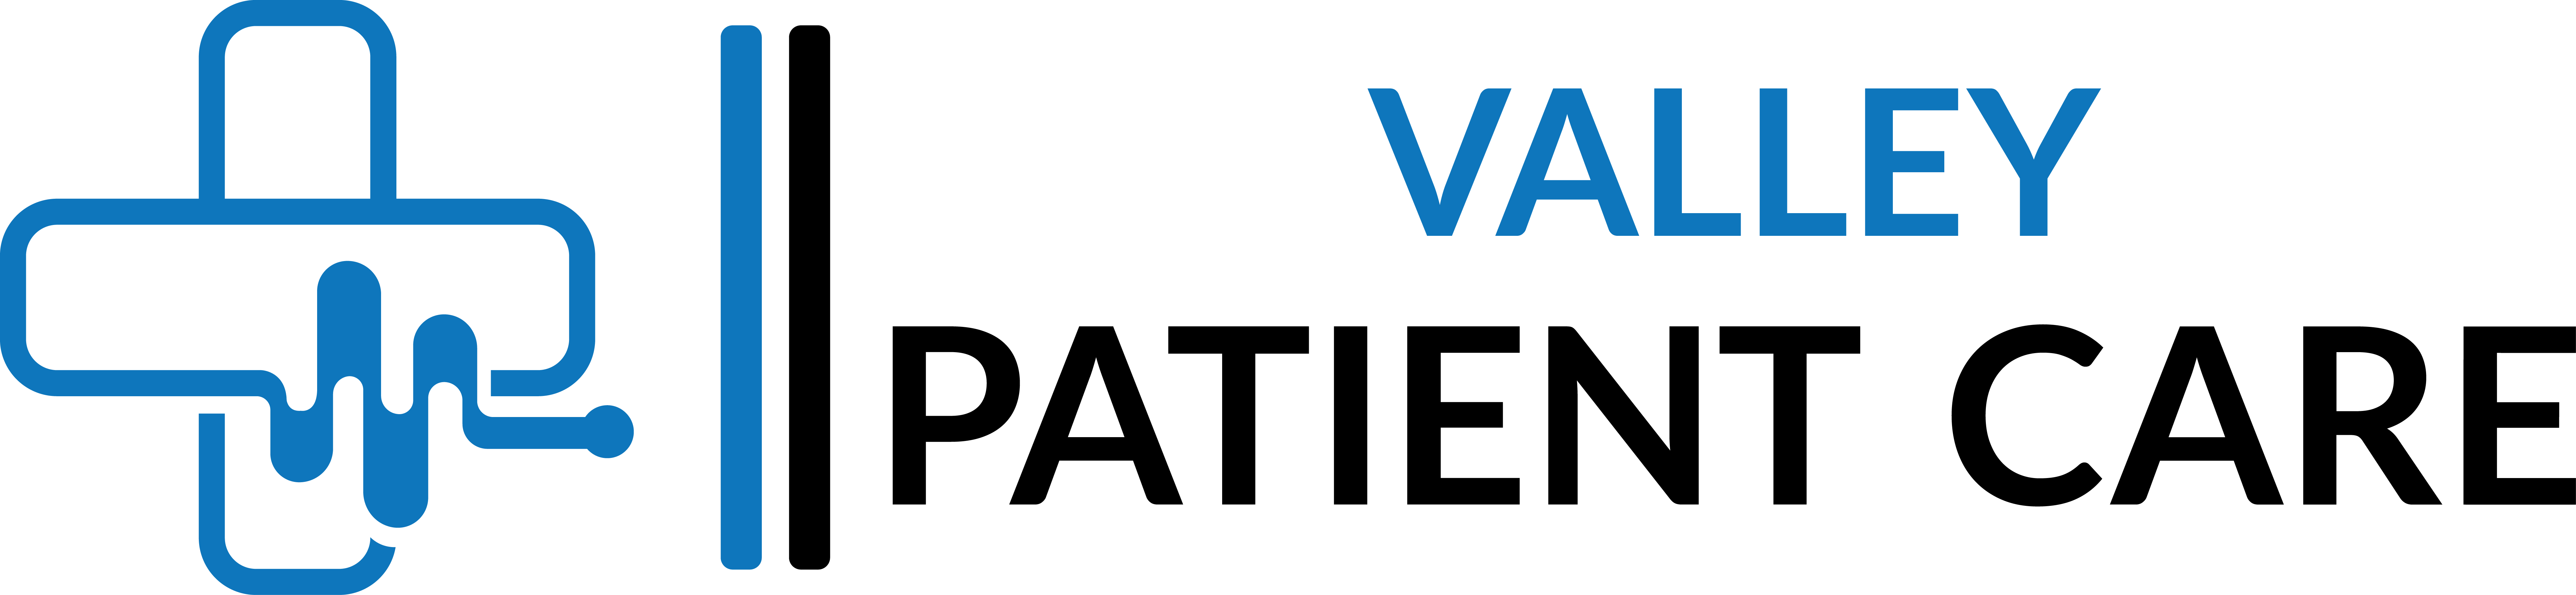 Valley Patient Care Urgent Care - Manassas Logo